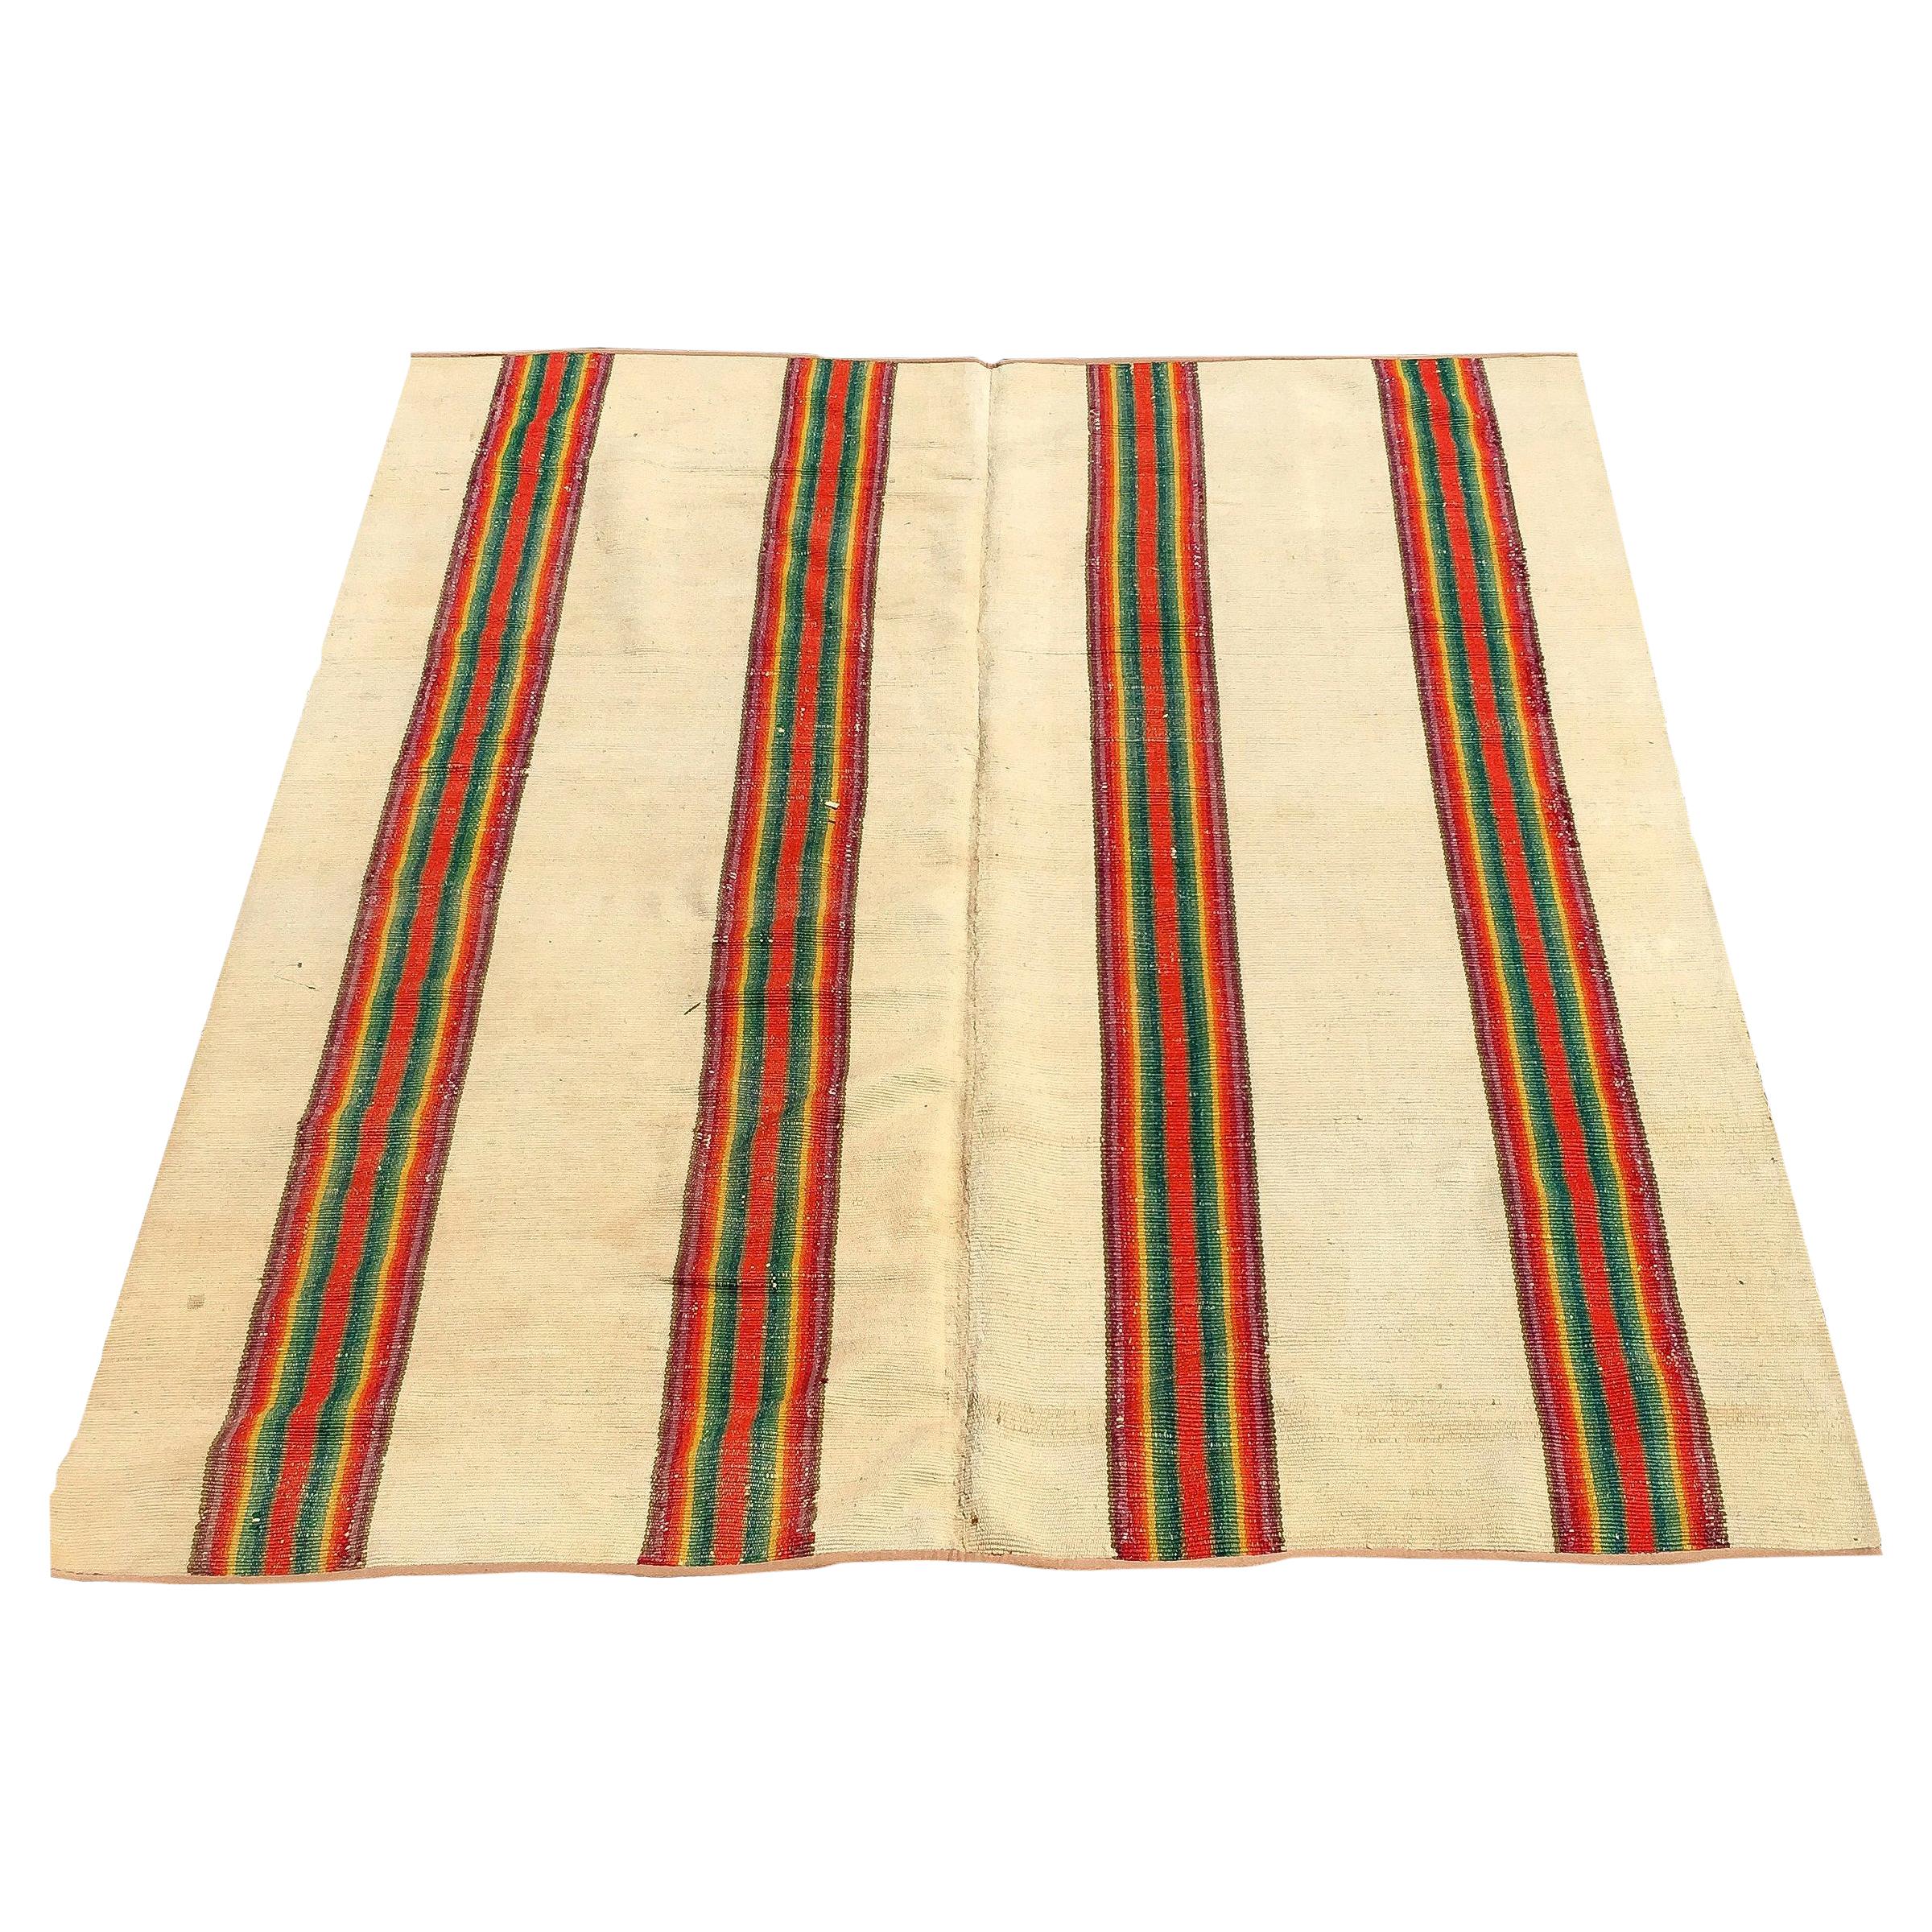 19th Century American Reversible Venetian Striped Carpet